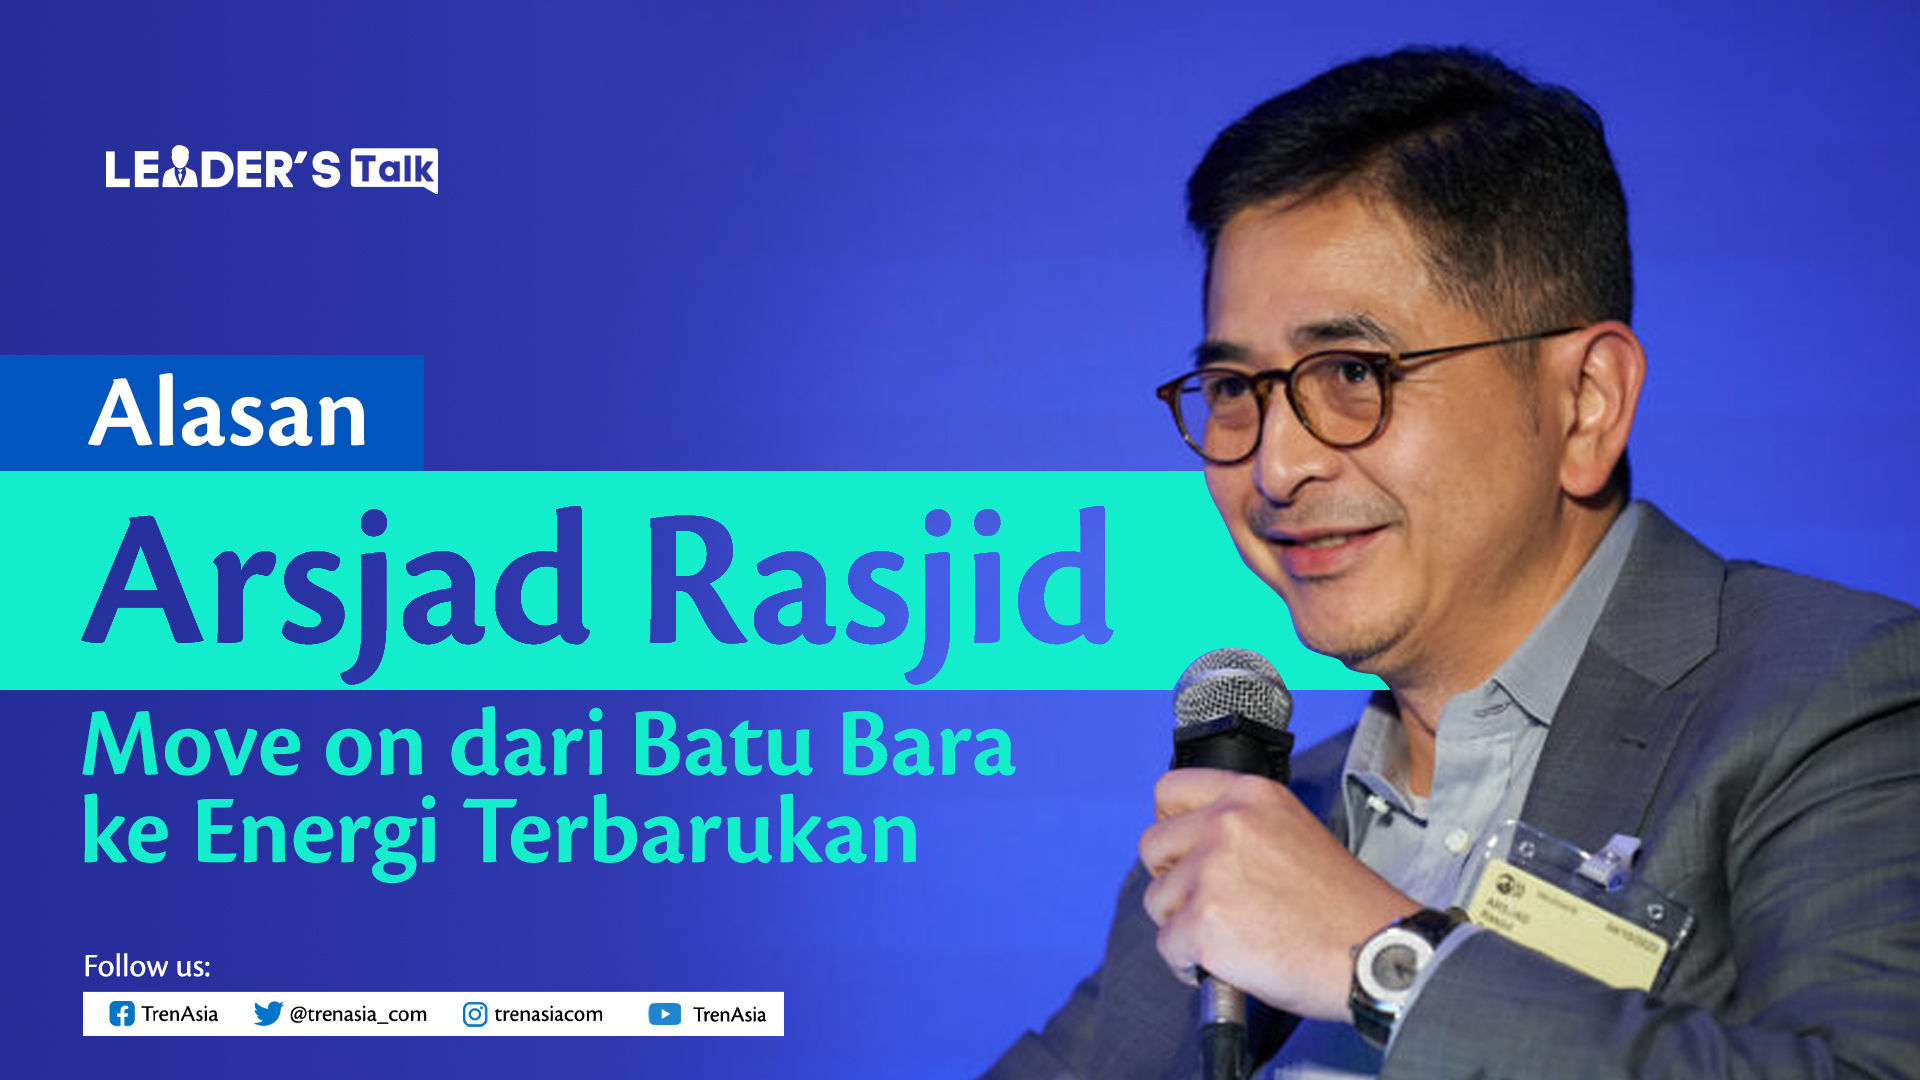 Arjasd Rasjid dalam program Leader's Talk di kanal Youtube TrenAsia.